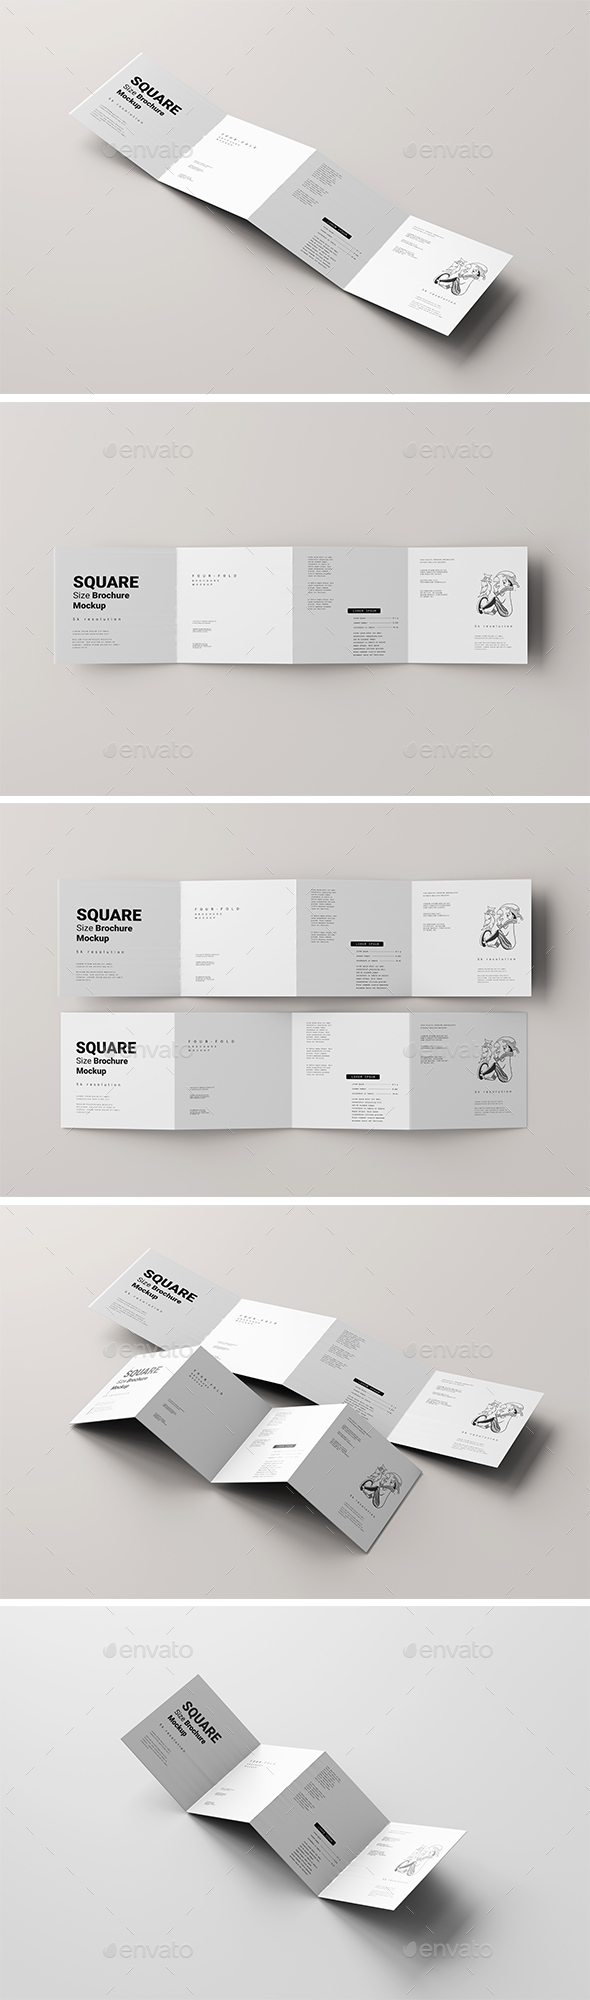 [DOWNLOAD]Square four-fold brochure mockup